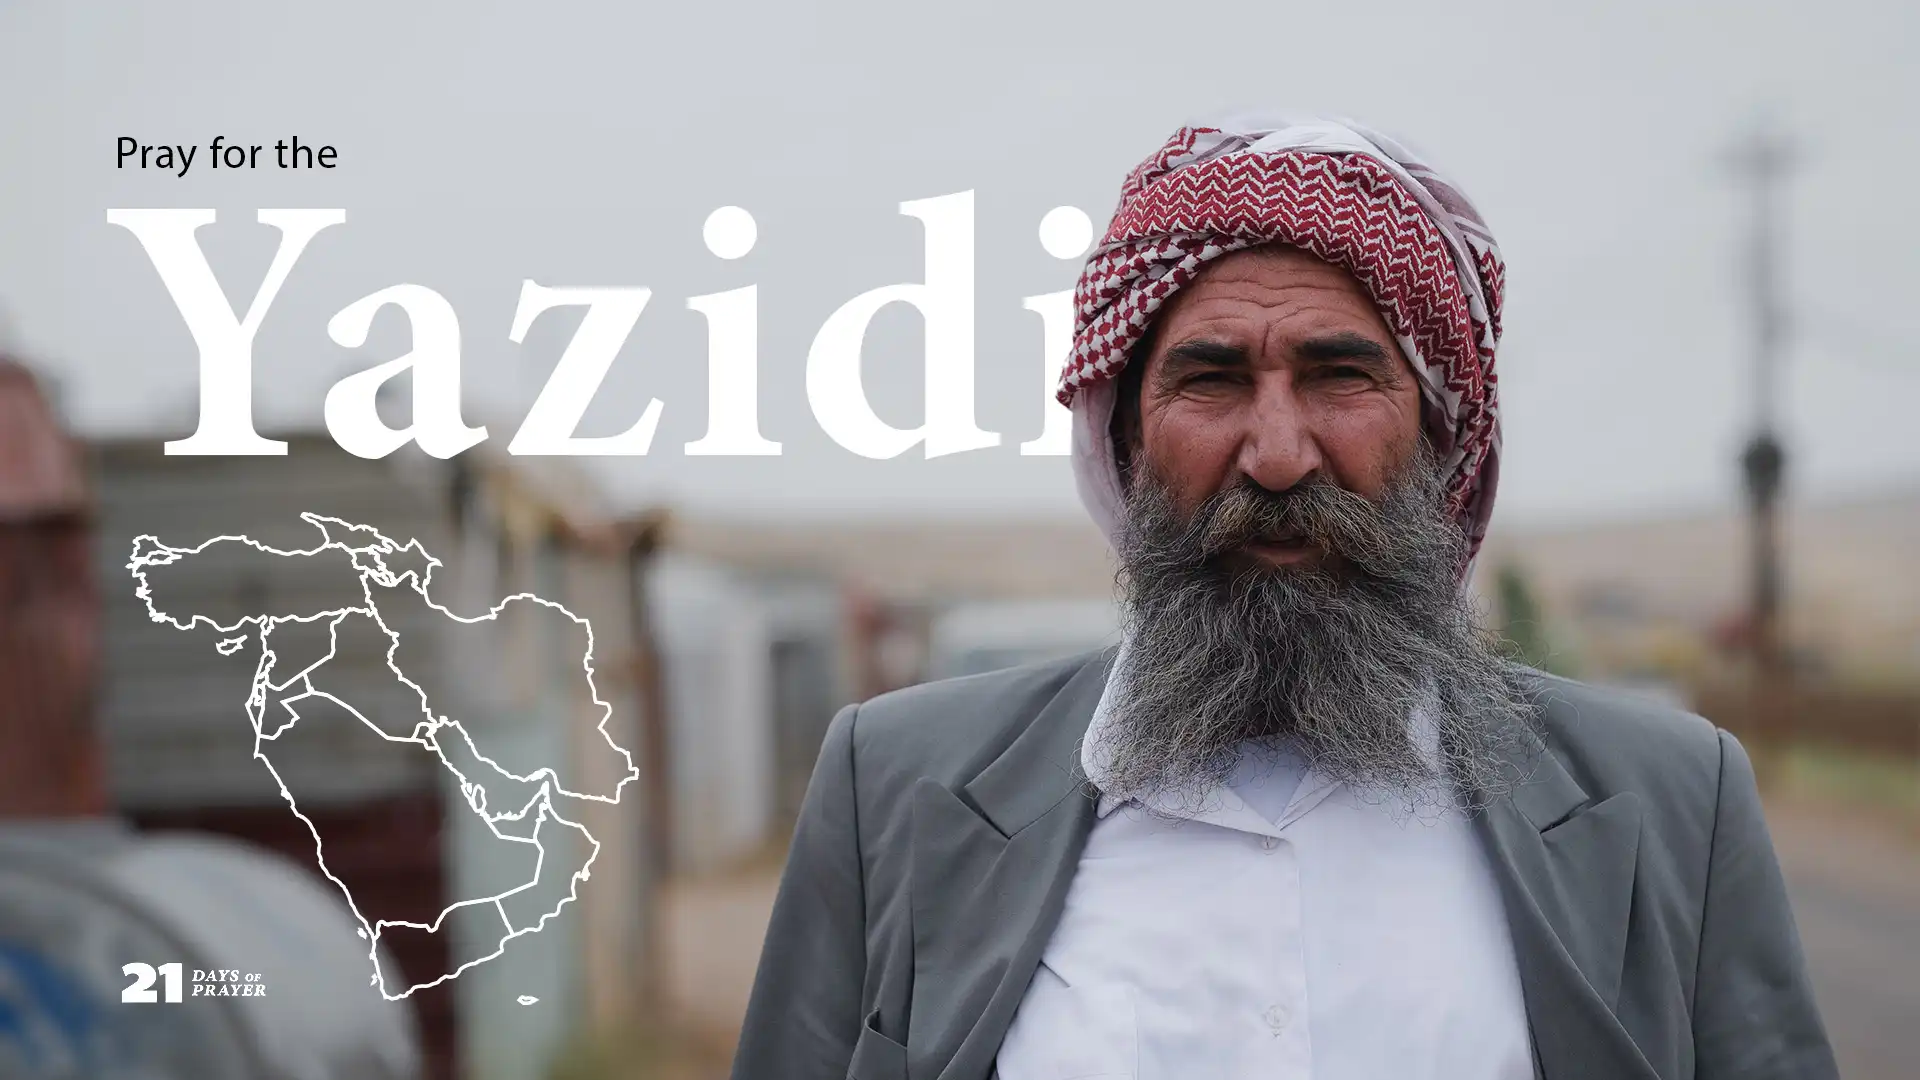 Yazidi people